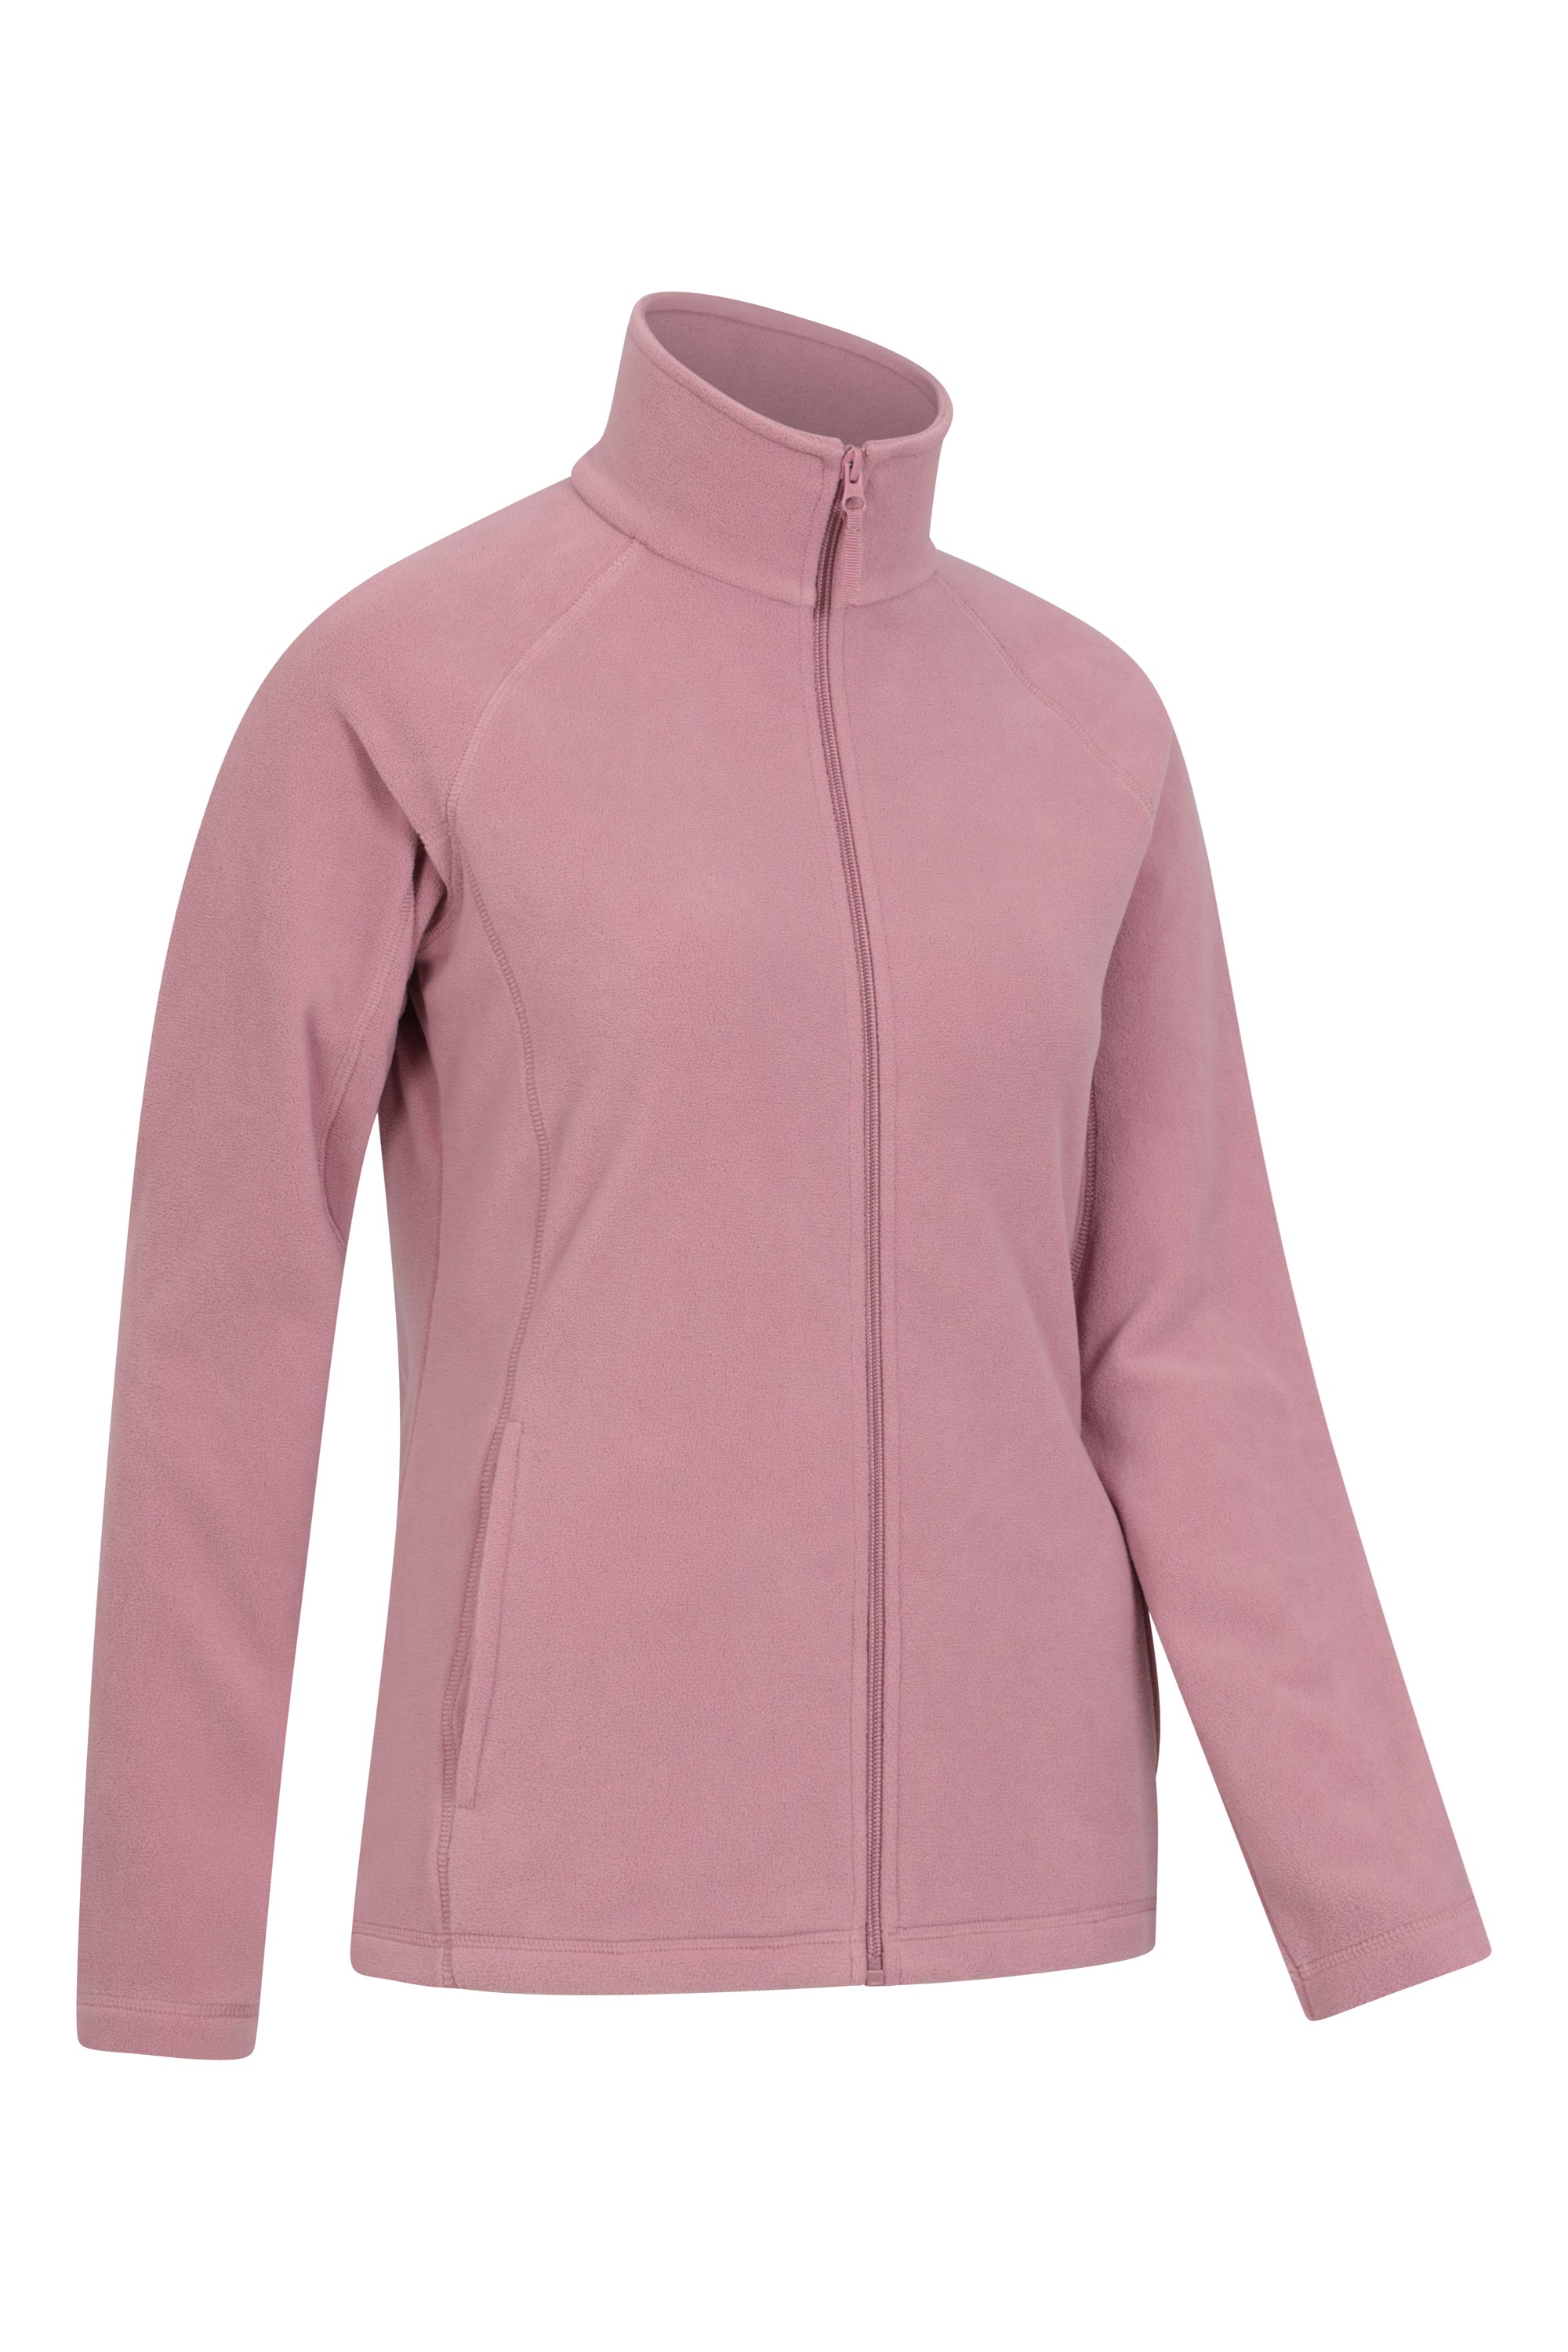 Mountain Warehouse Raso Womens Fleece - Microfleece Ladies Sweater